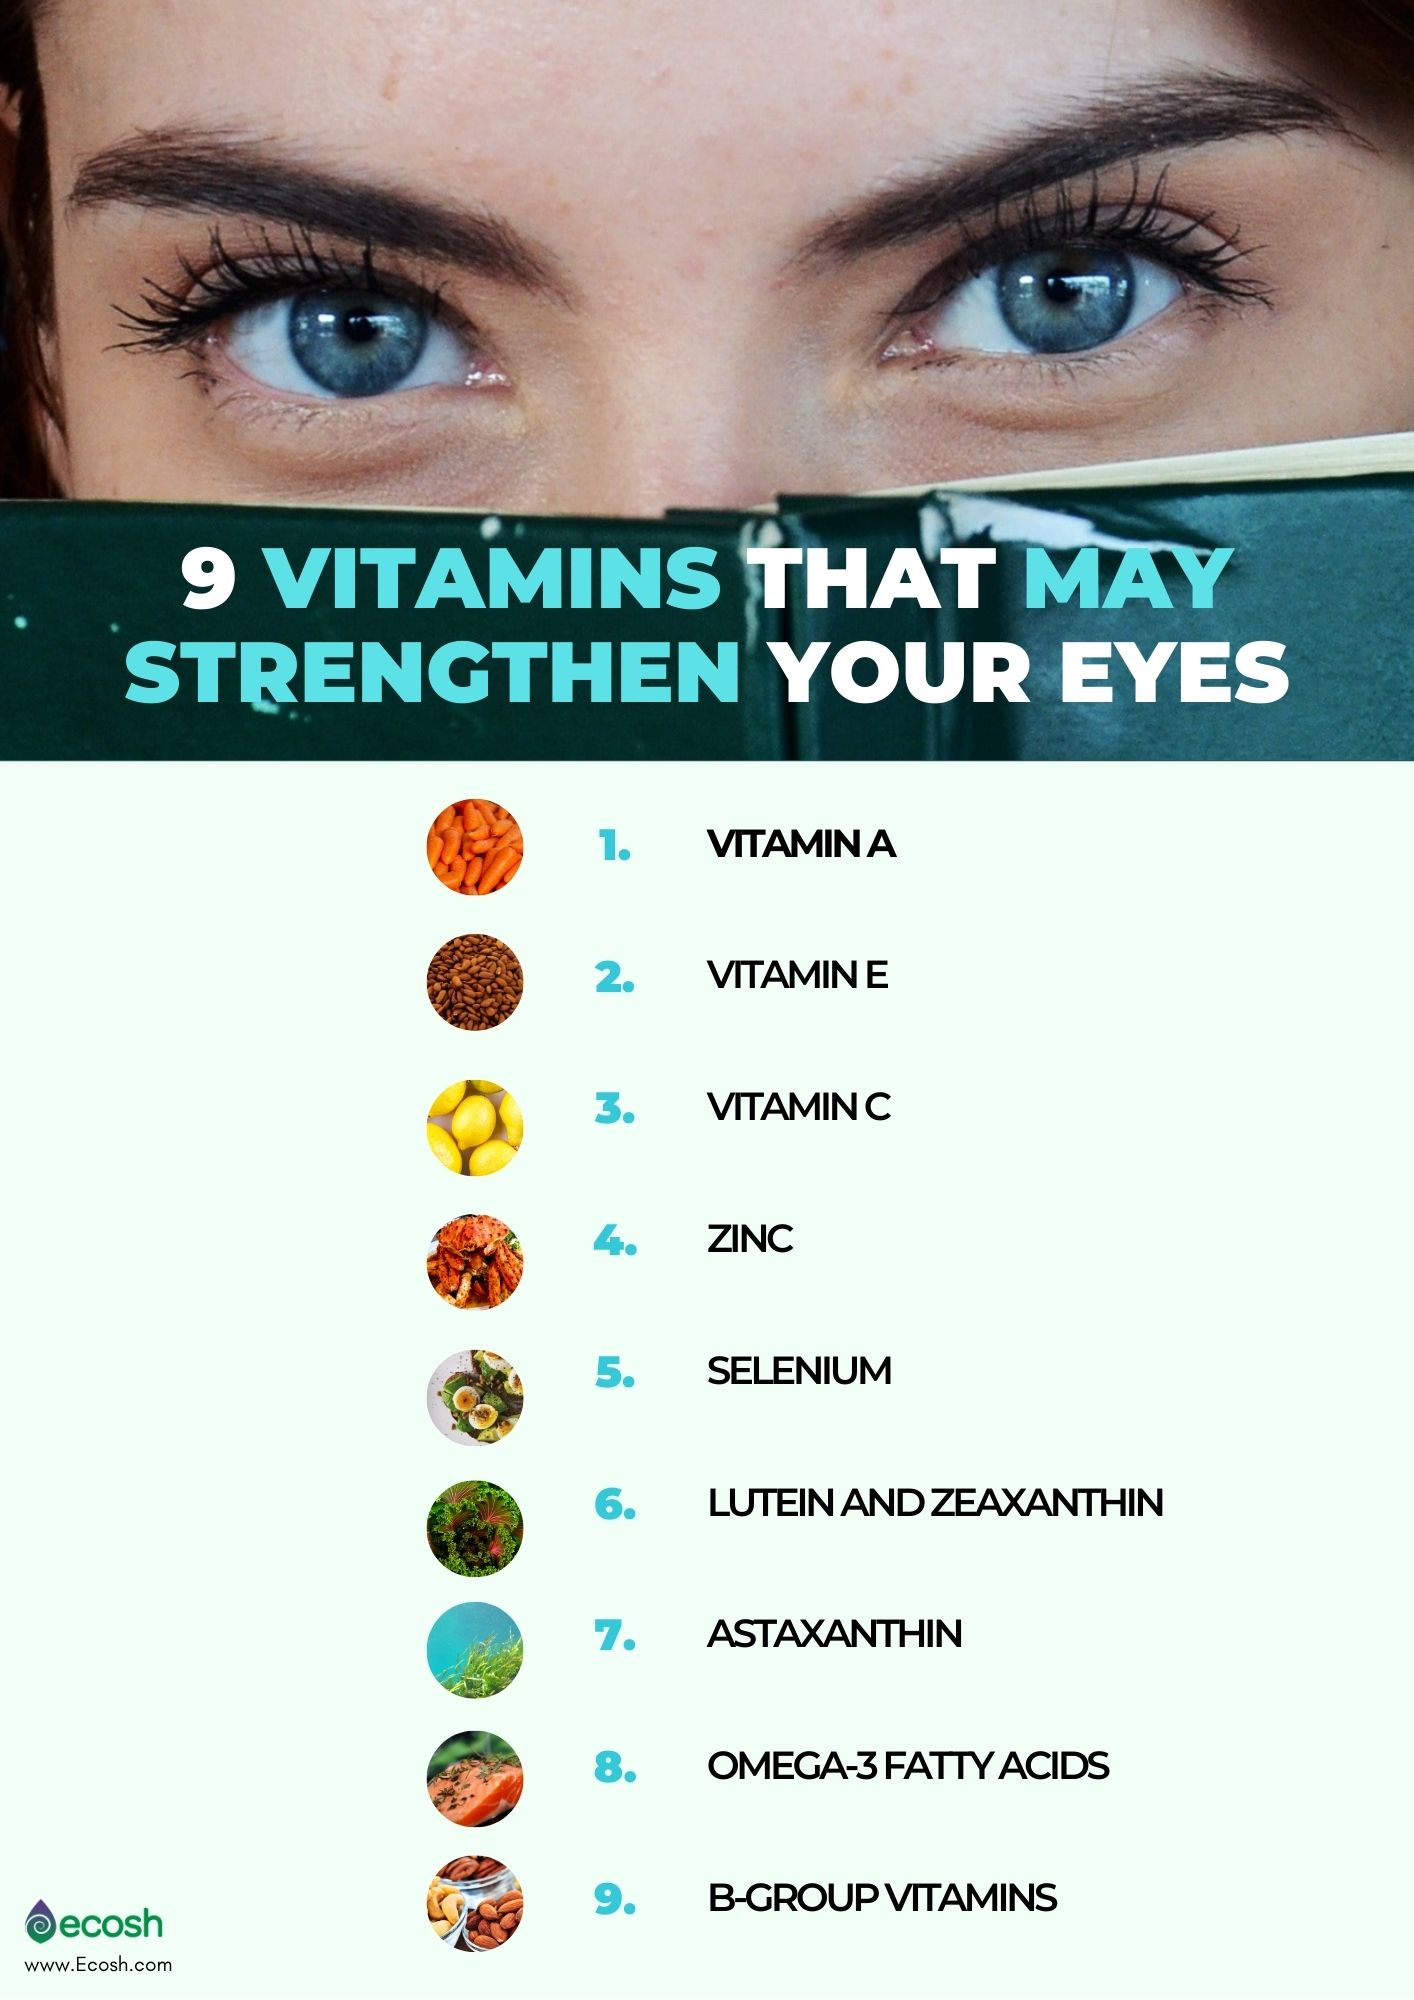 Ecosh_Eye_Vitamins_9_Vitamins_That_Strengthen_Your_Eyes_Eye_Supplements_Supplements_For_Eyes_Eye_Health